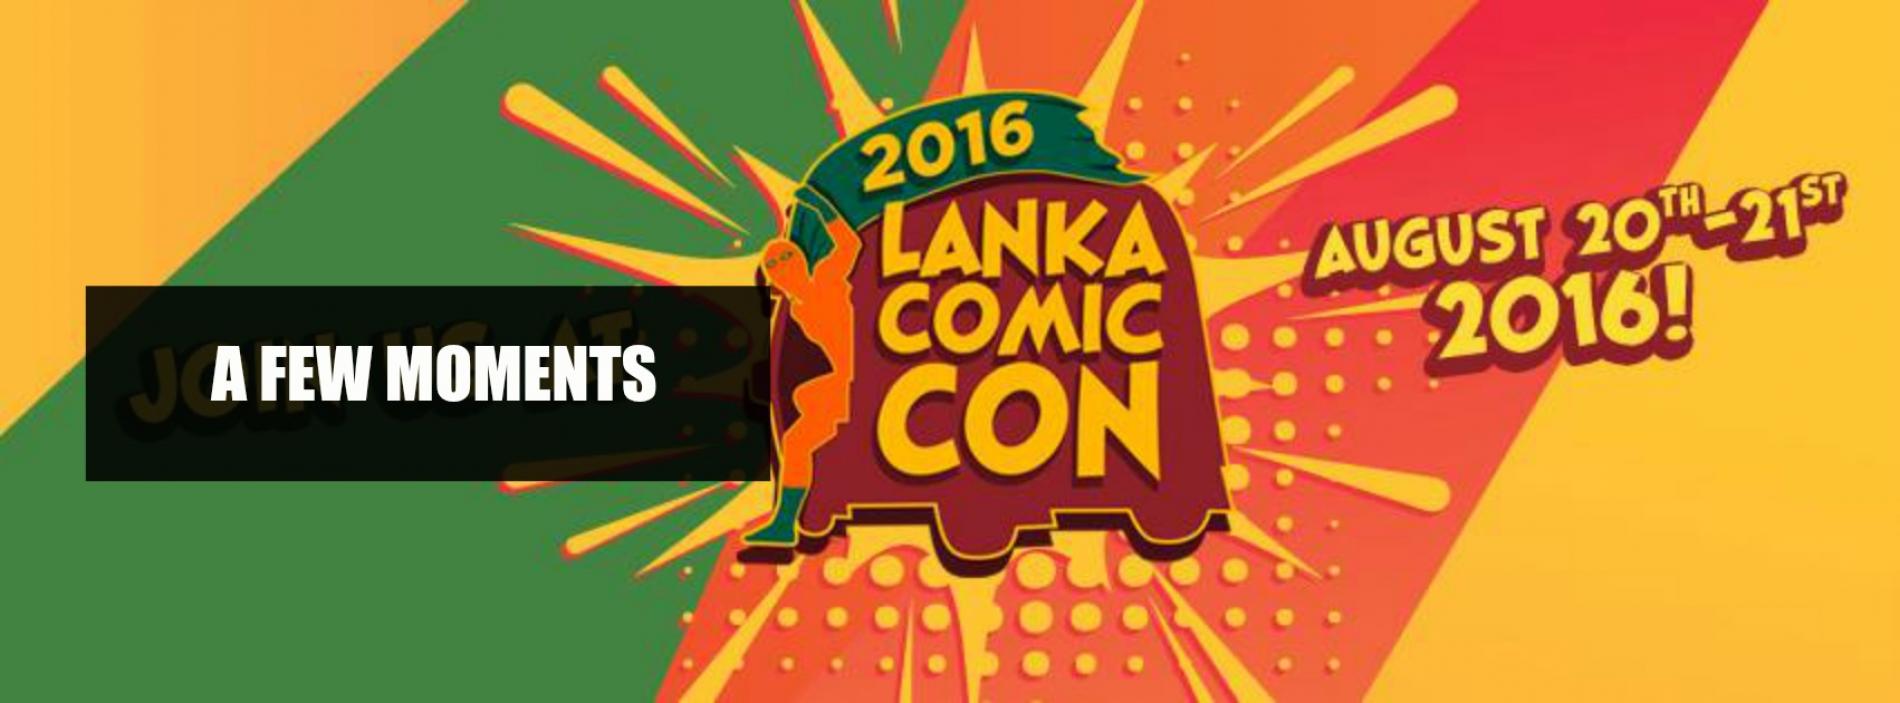 Lanka Comic Con 2016 (A Few Moments)